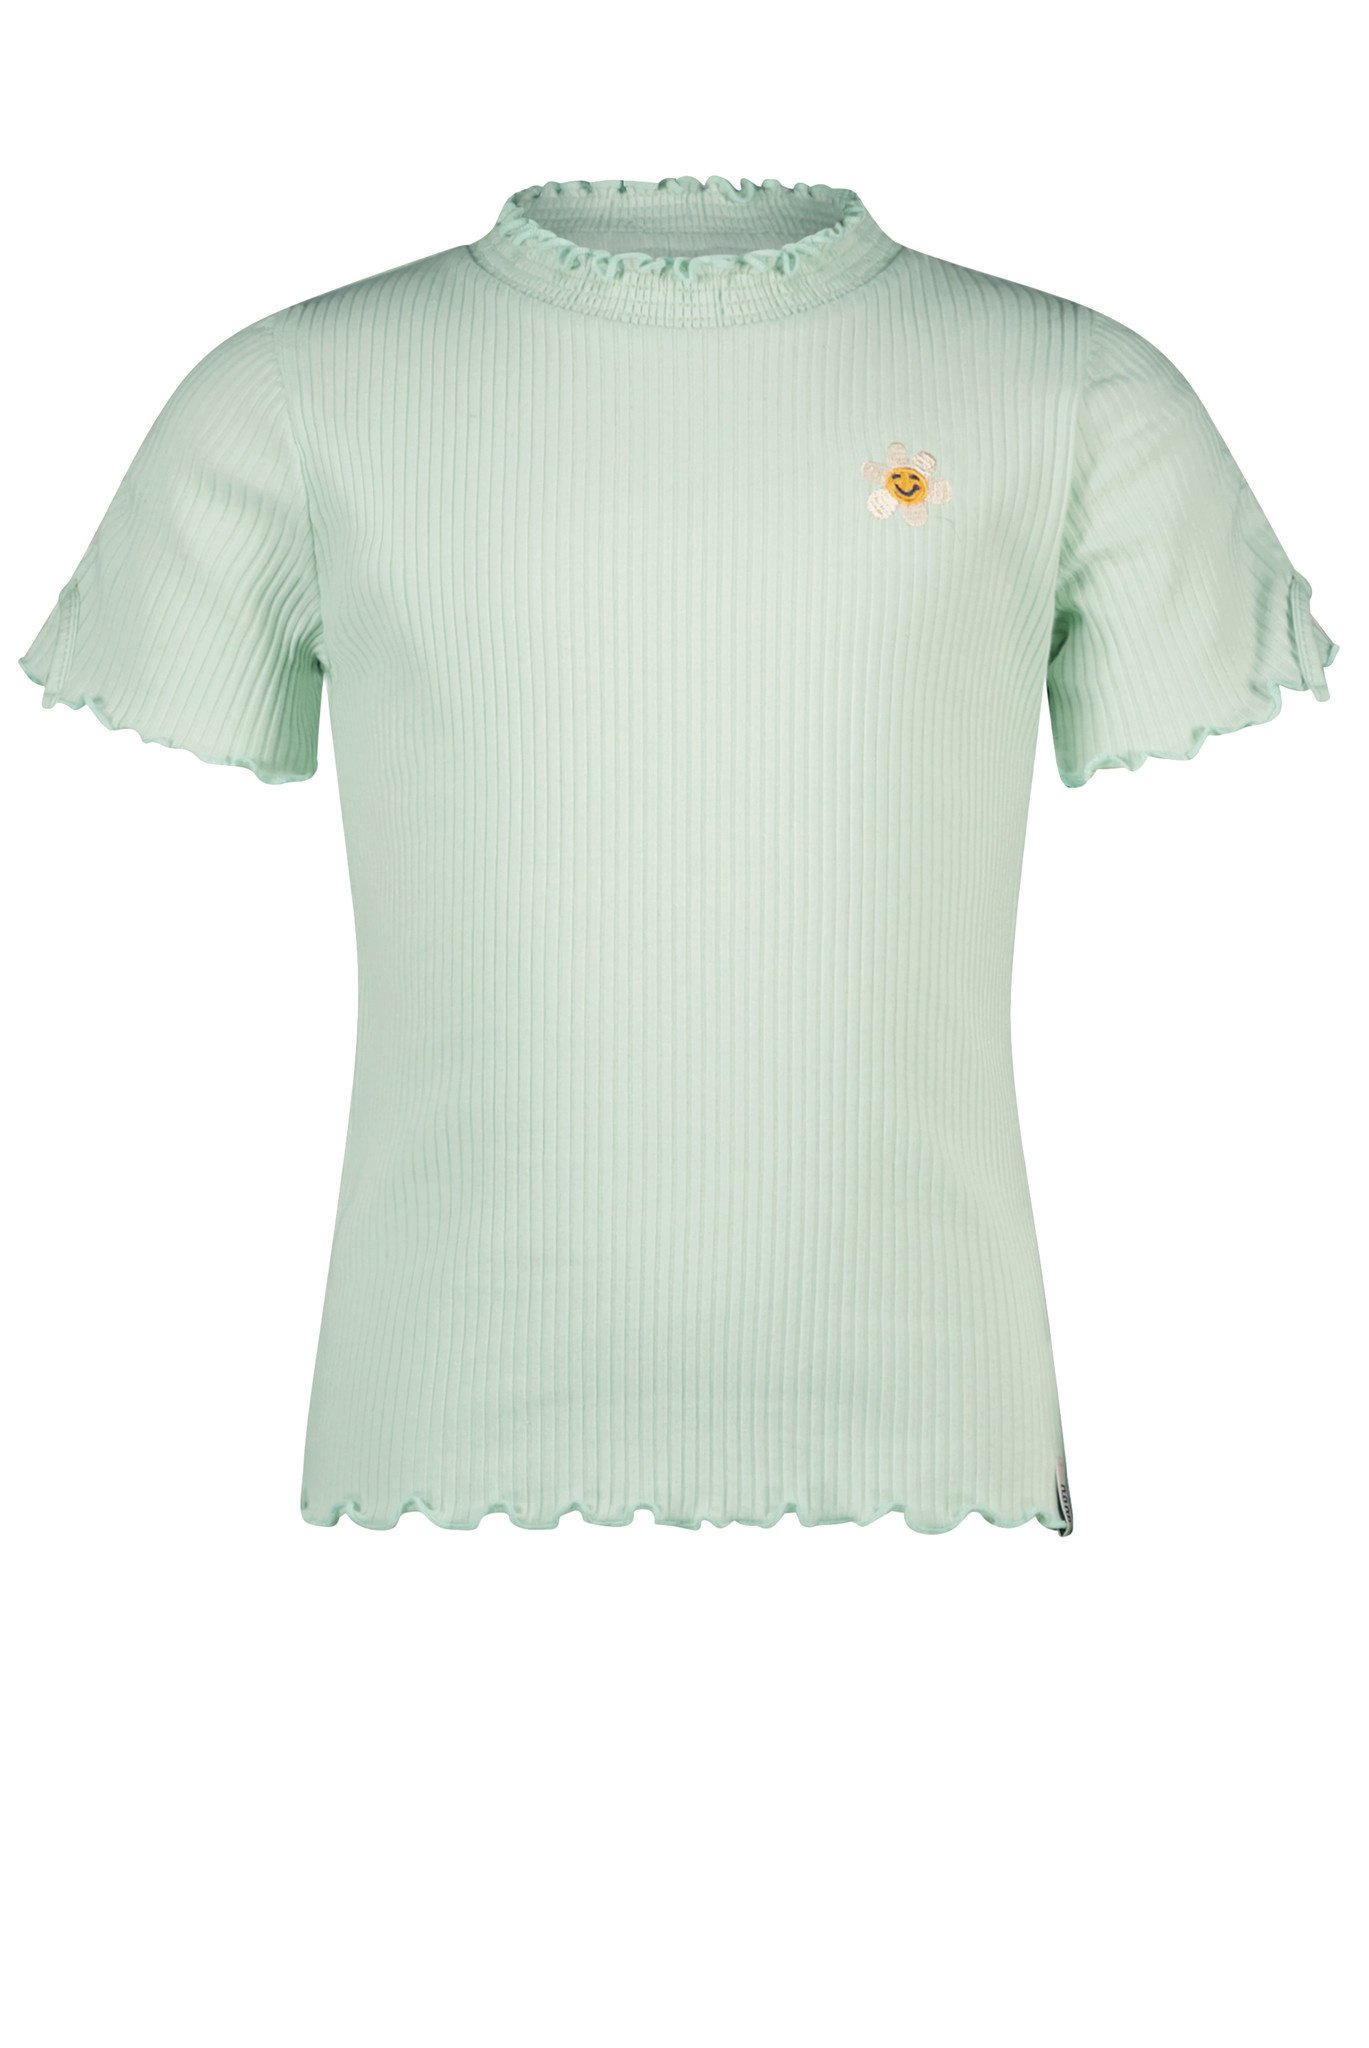 NONO - T-Shirt - Cream Mint - Maat 116